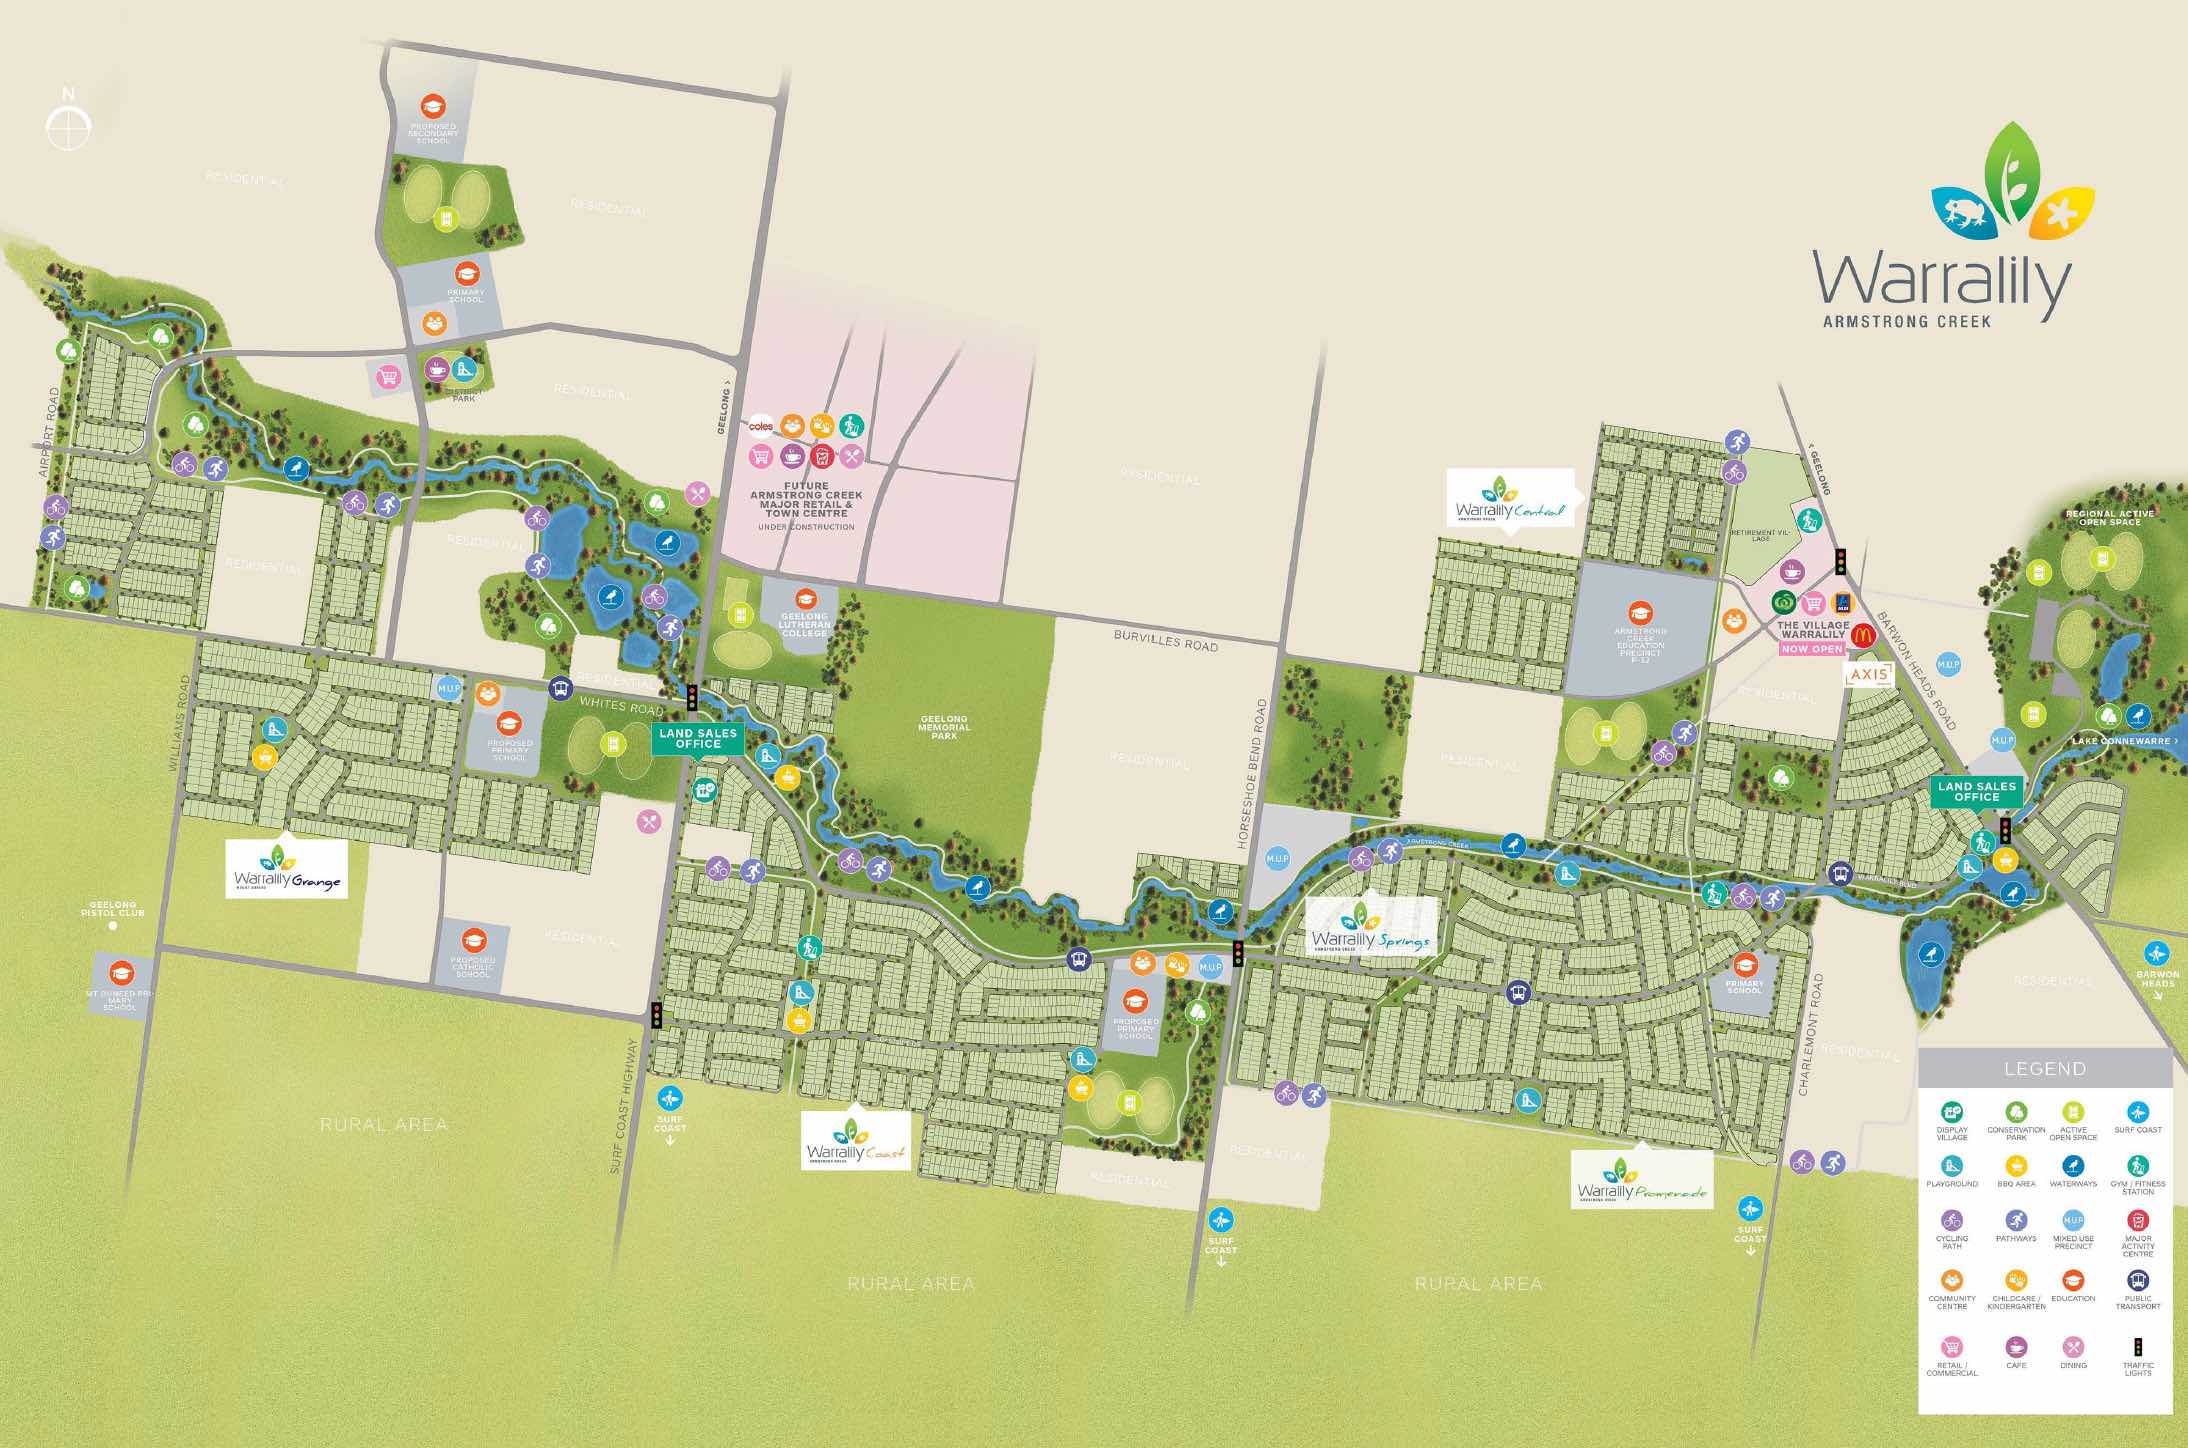 Warralily Promenade & Central Estate - Armstrong Creek Masterplan